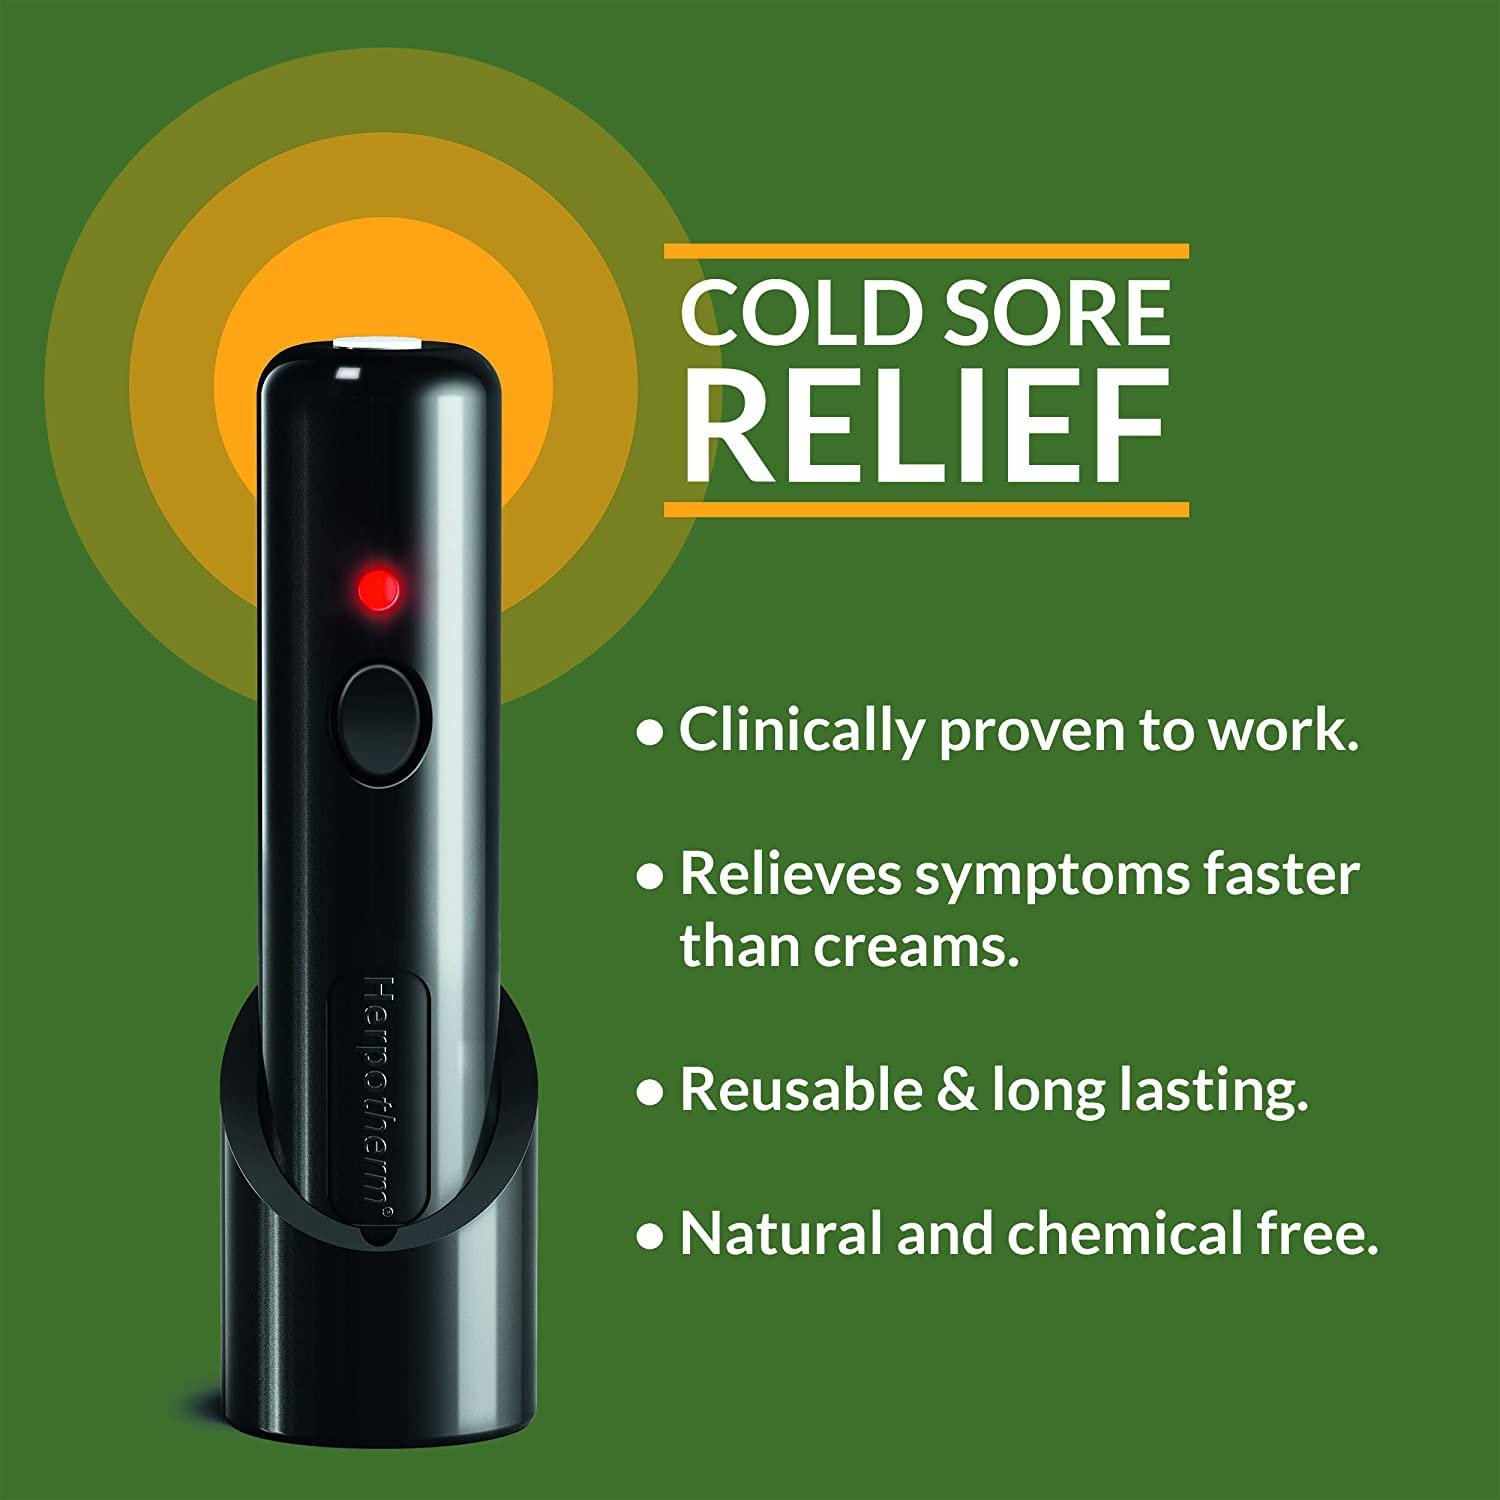 Hangsun Herpotherm Cold Sore Treatment Device - Reusable and Clinically Proven